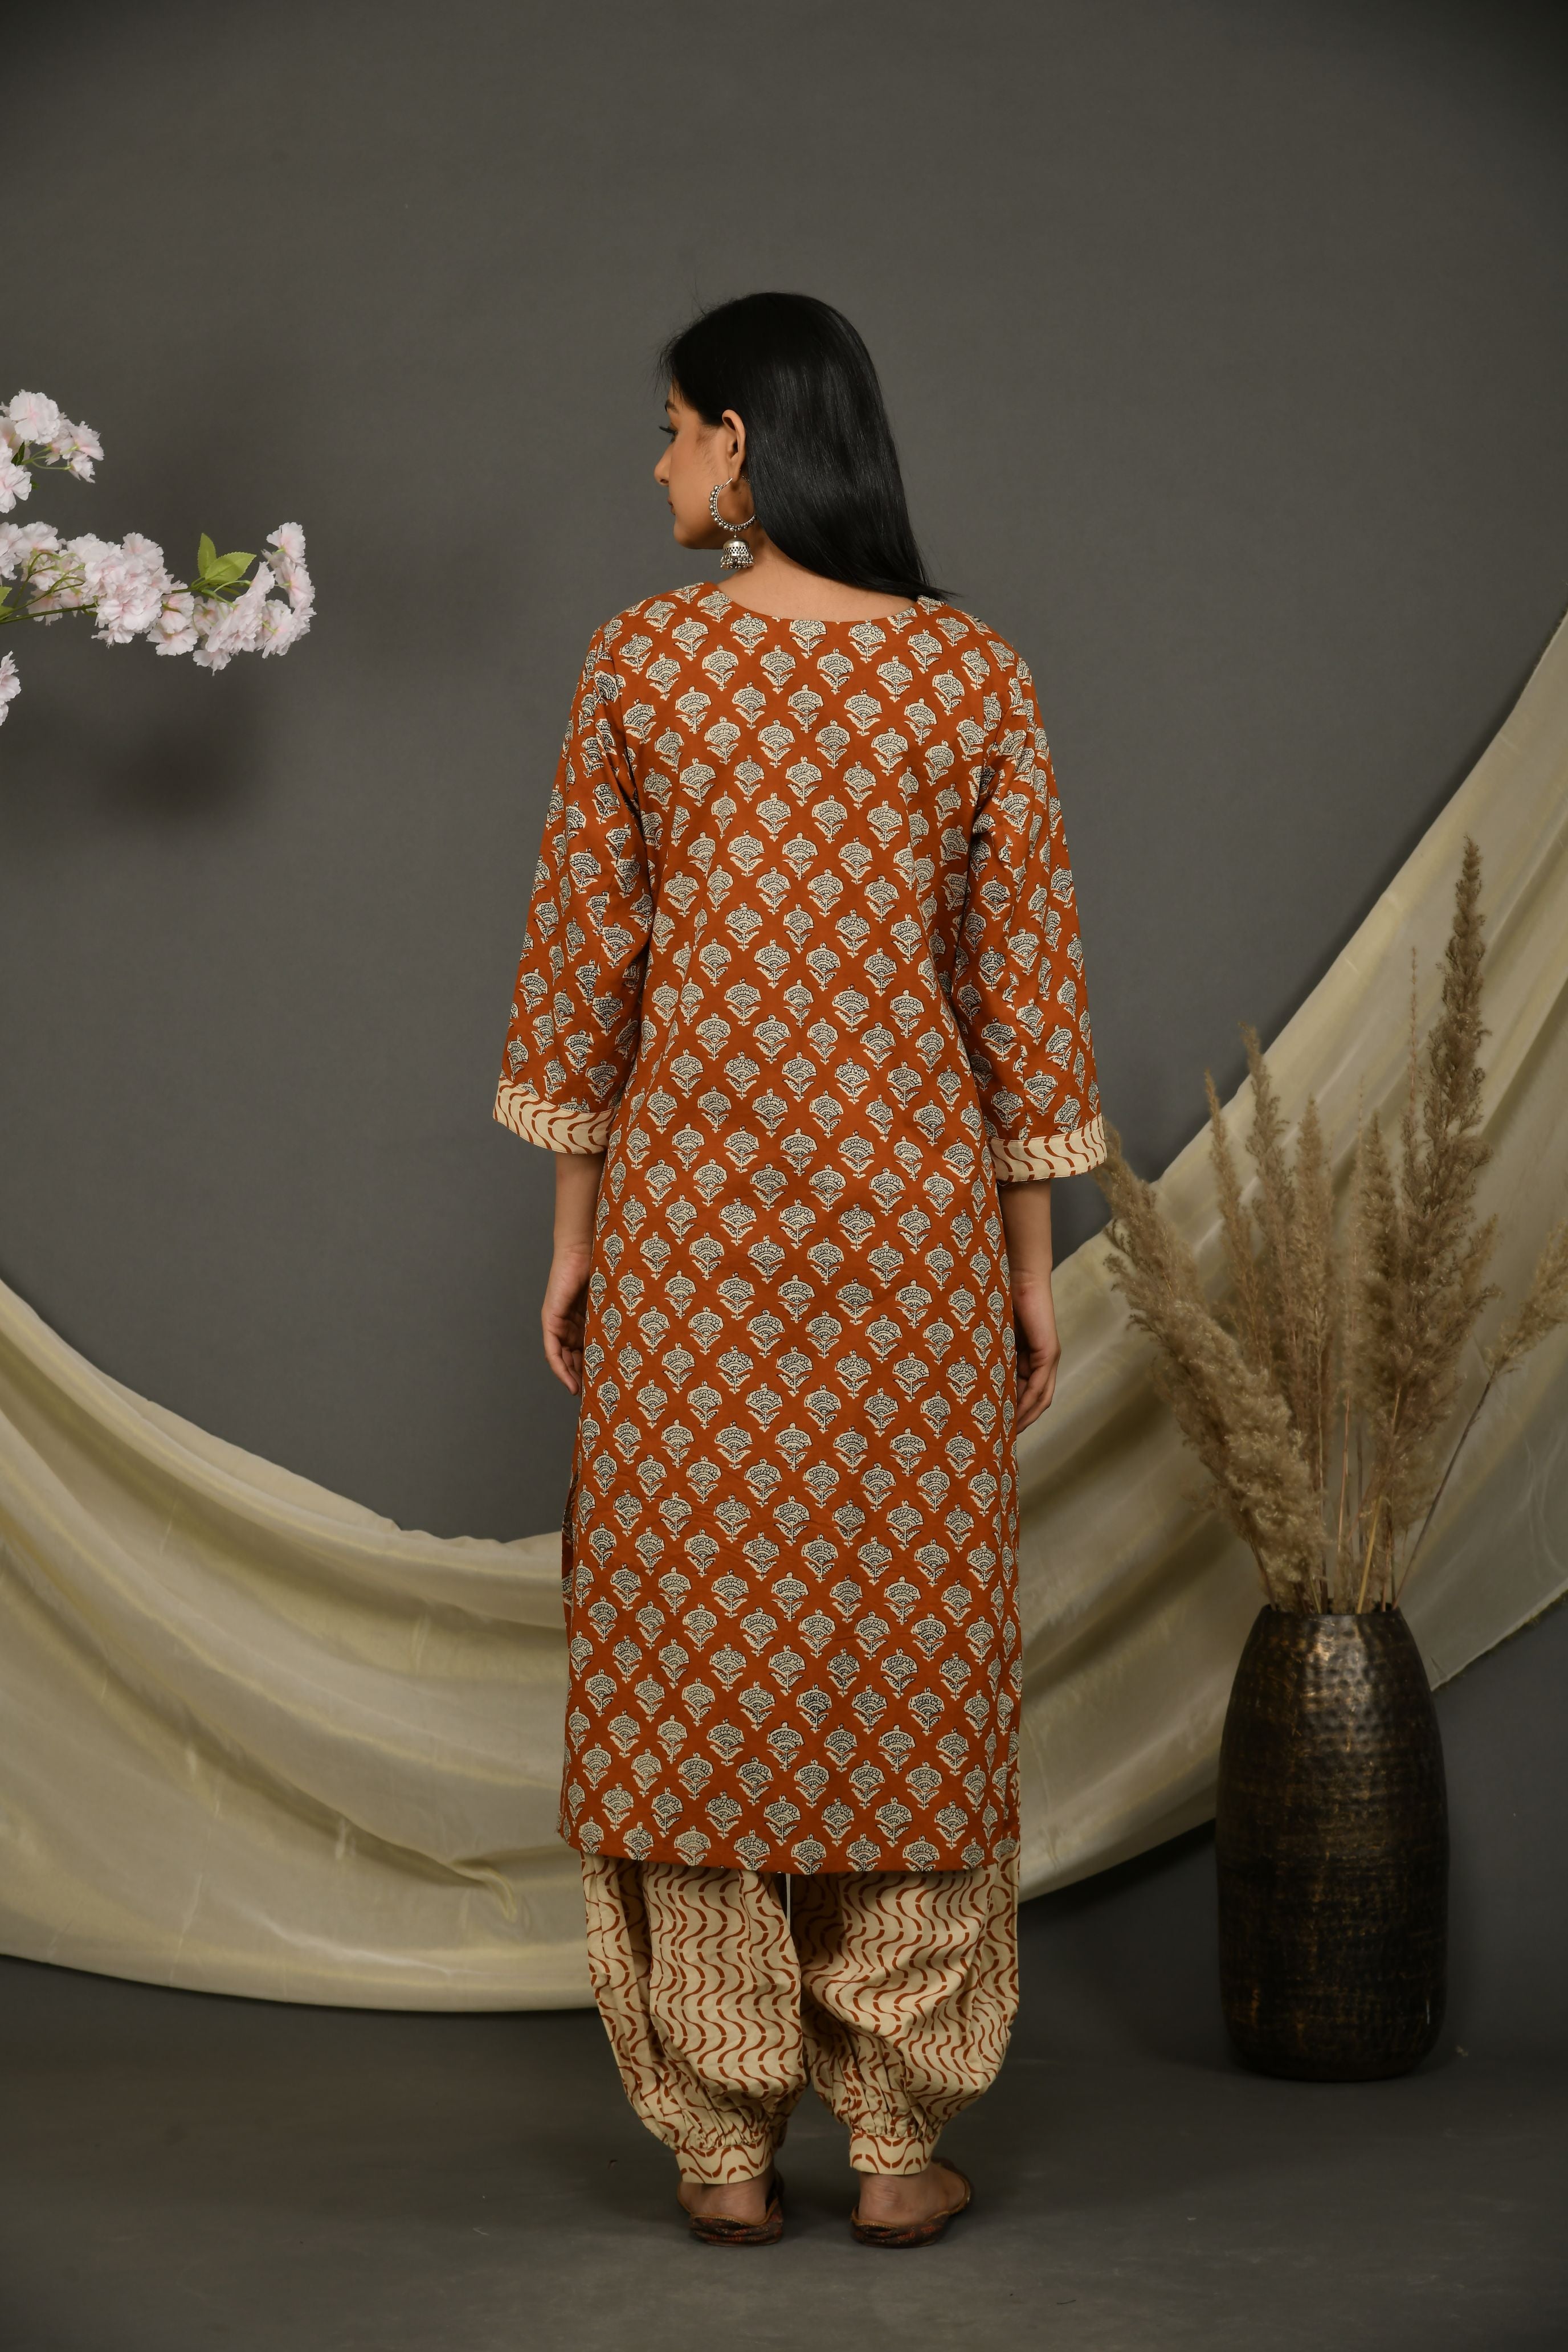 Rusted brown cotton jaipuri printed kurta with beige printed pants and dupatta.